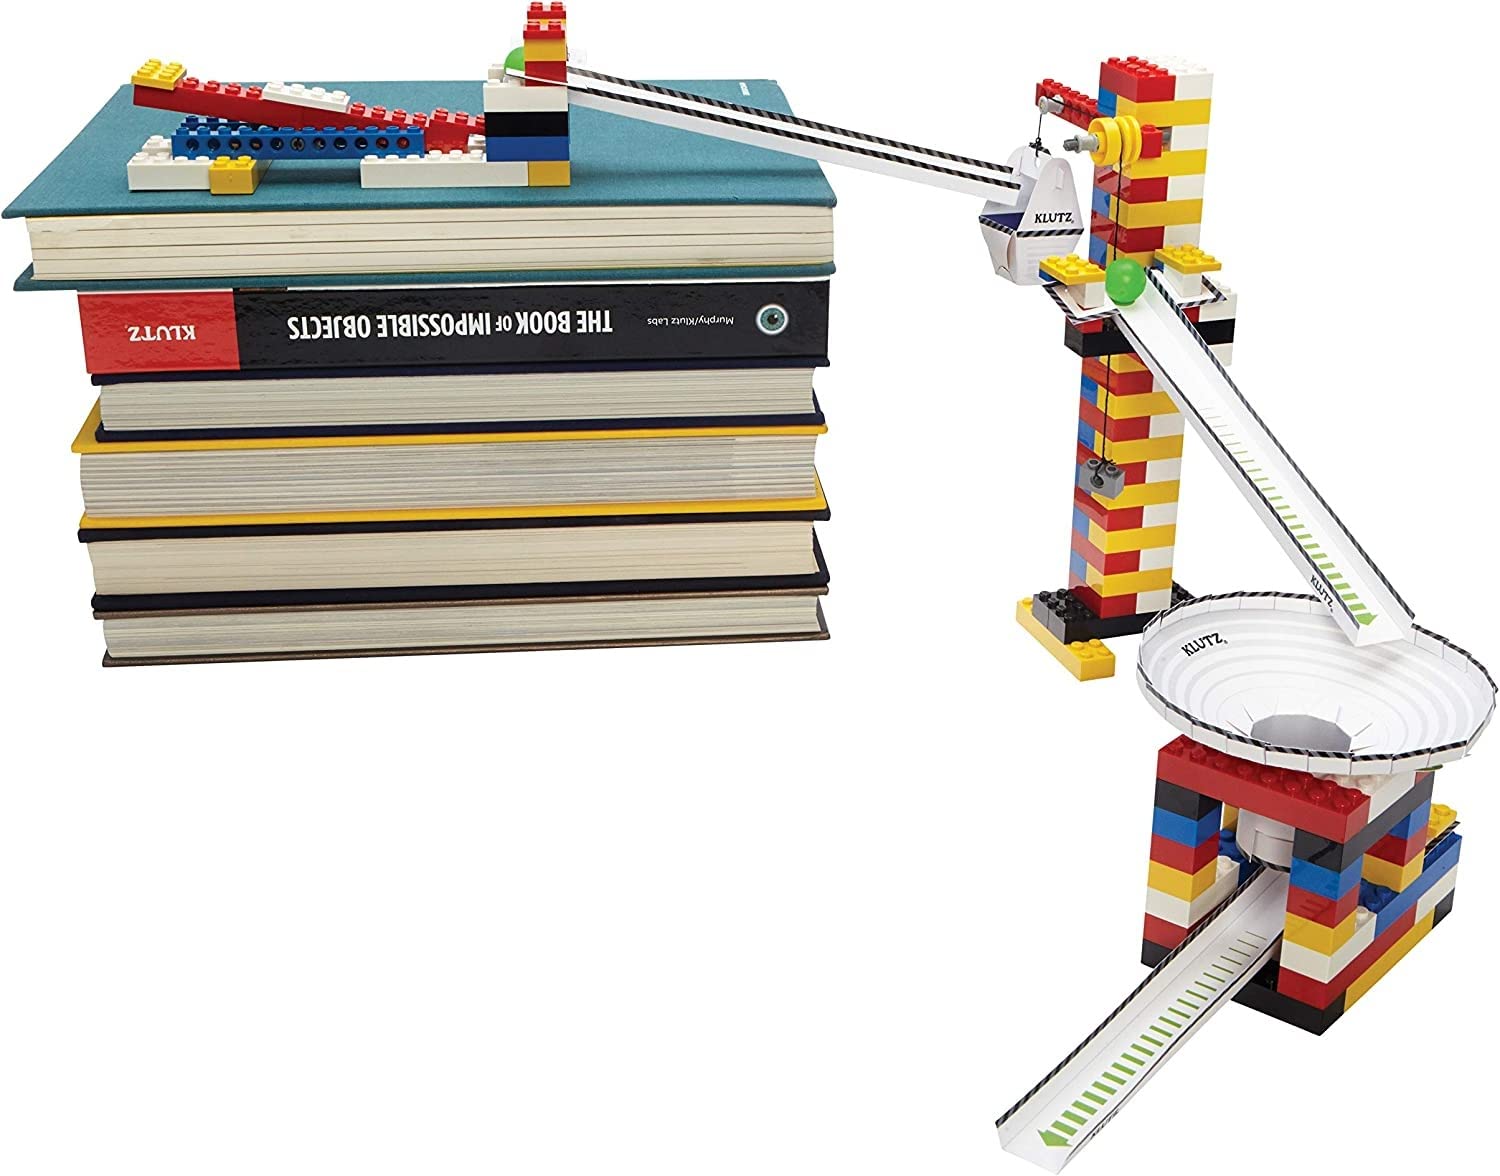 LEGO Chain Reactions (Klutz Science/STEM Activity Kit), 9